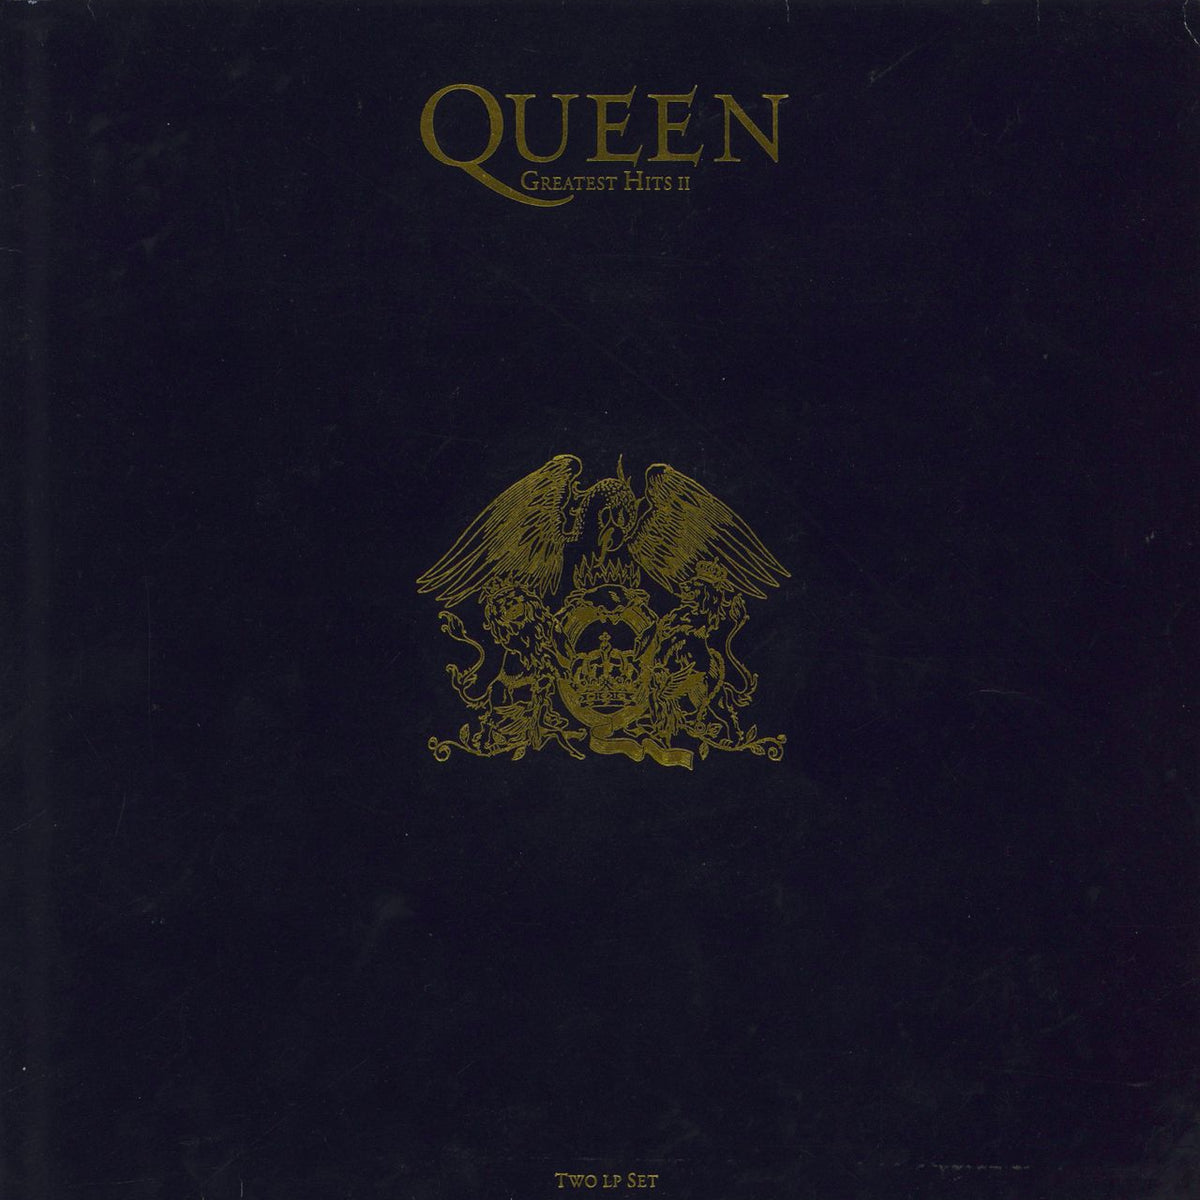 Queen Greatest Hits II - 1st - VG UK 2-LP vinyl set — RareVinyl.com